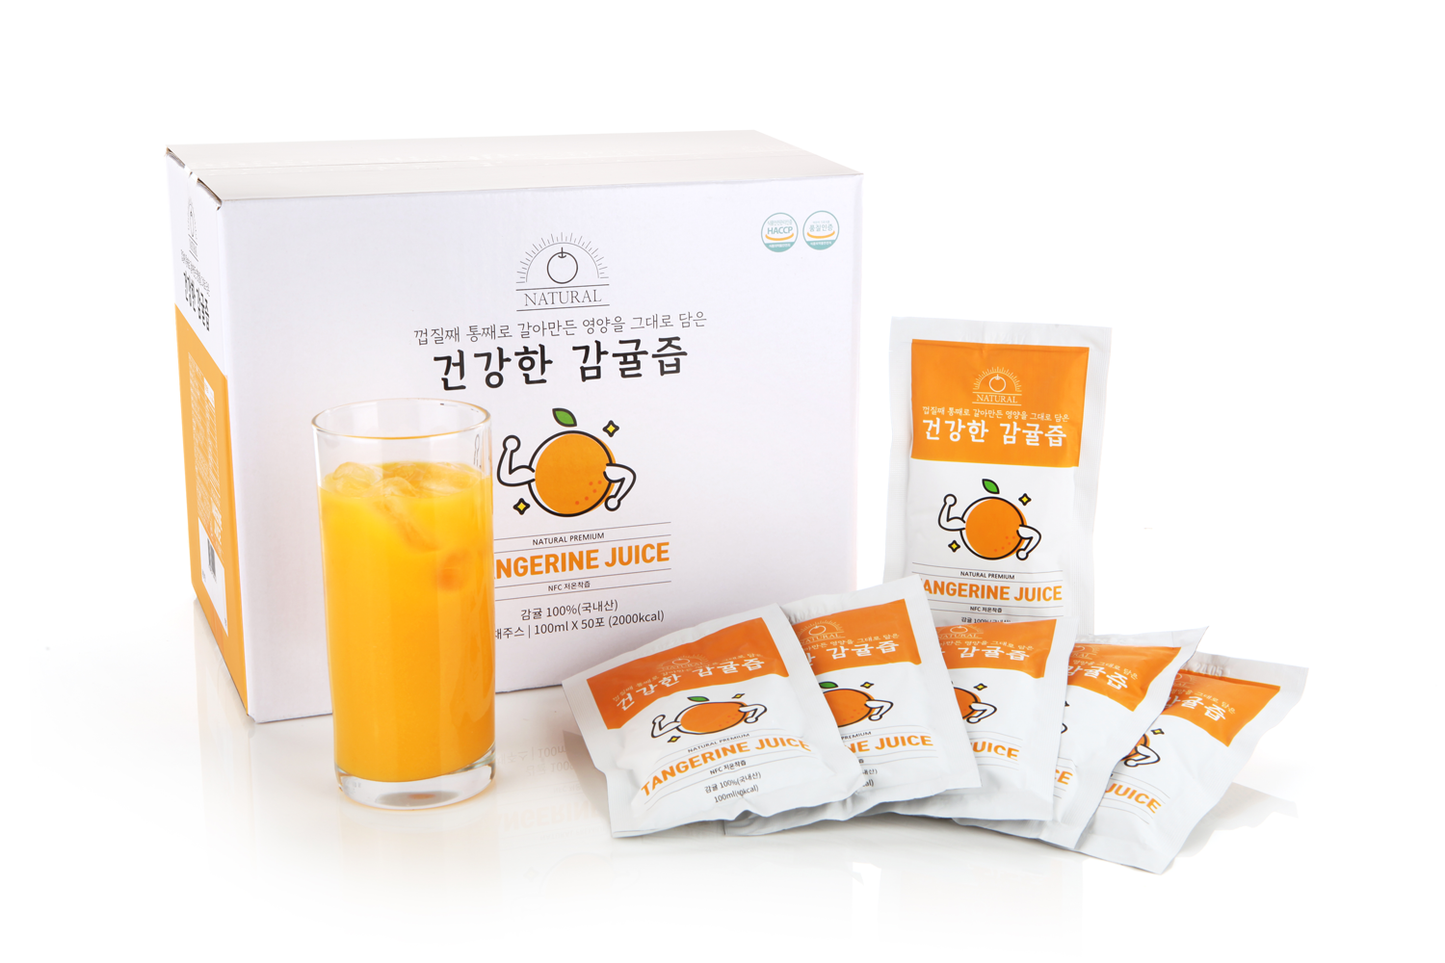 Healthy Tangerine Juice (3.4oz X 30)